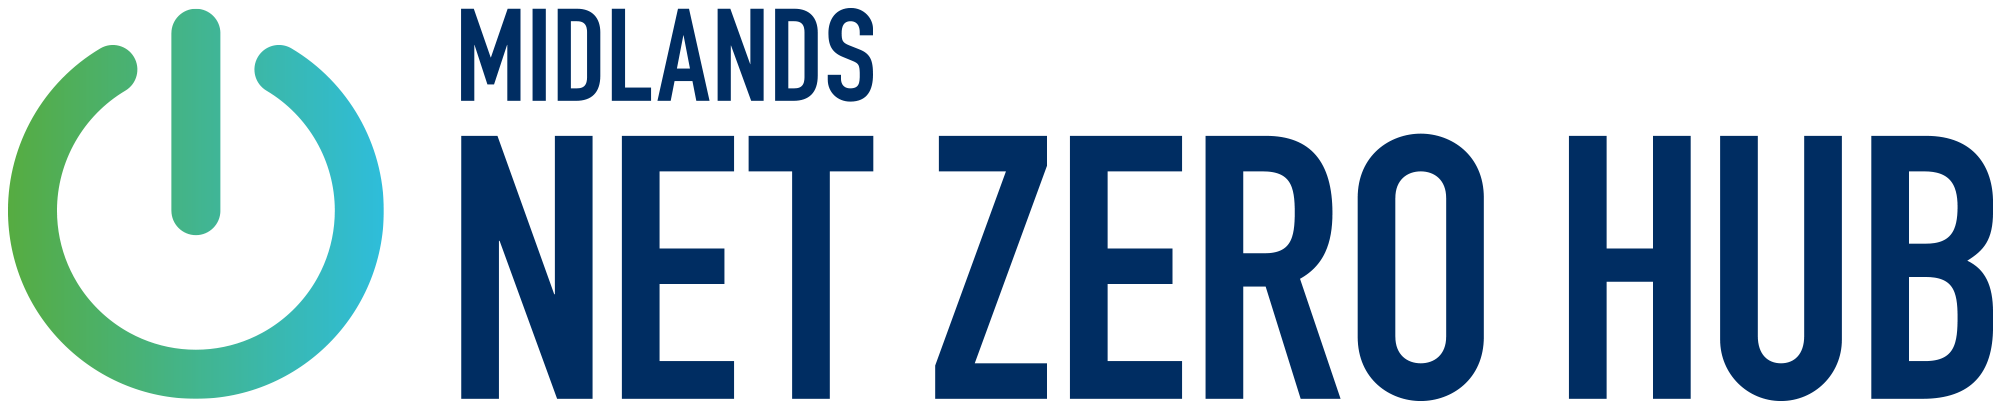 midlands-net-zero-hub-logo-PRIMARY